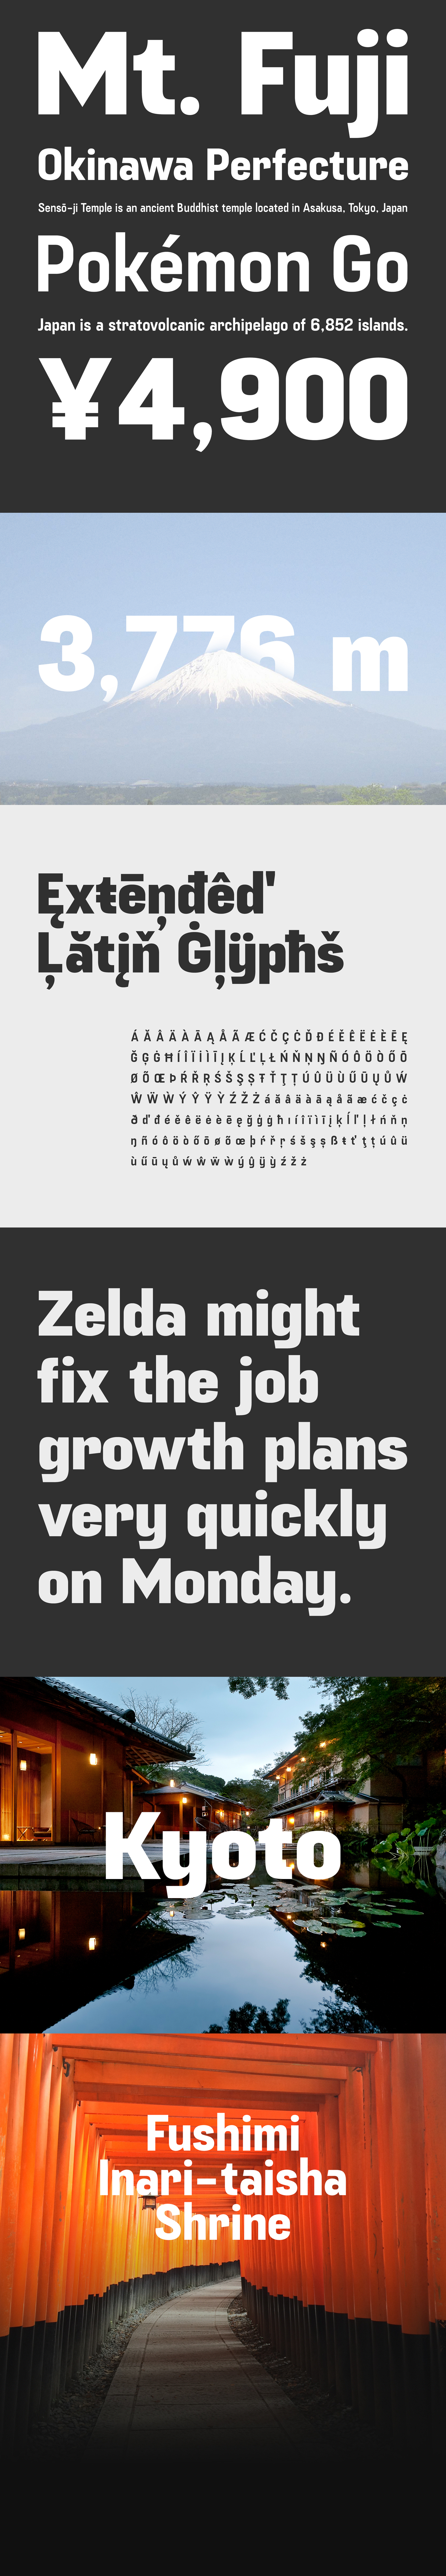 font bold sans-serif geometric minimalist Quality fontface type Typeface